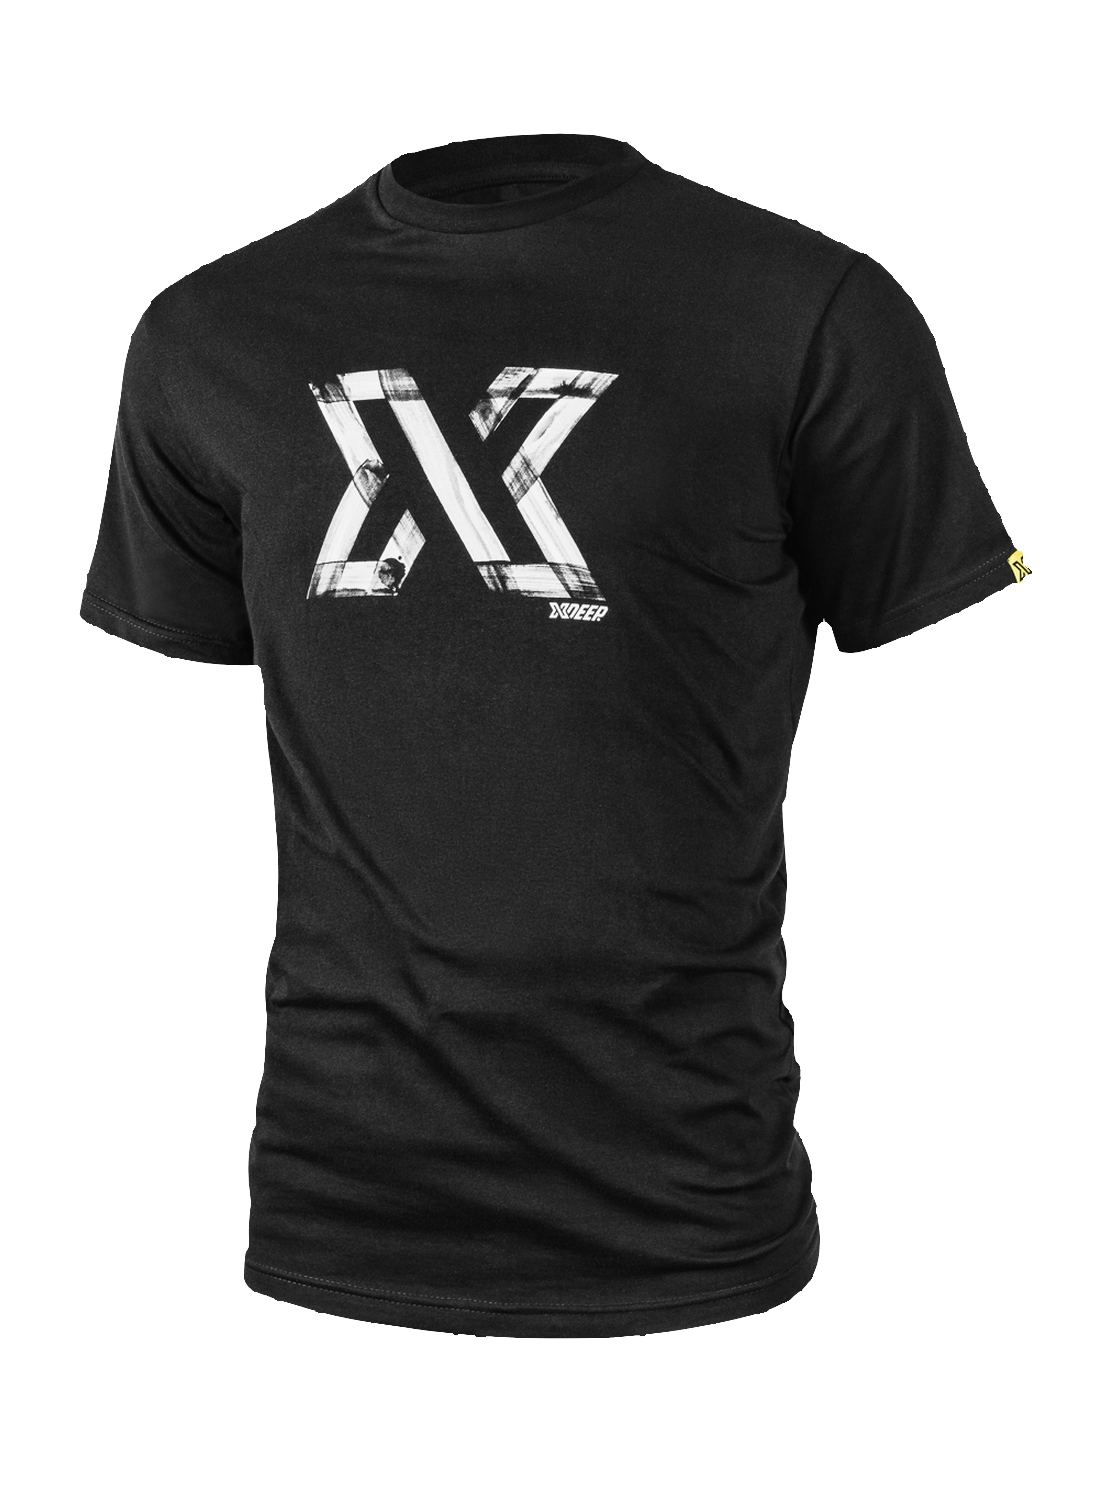 XDEEP Painted X T-Shirt